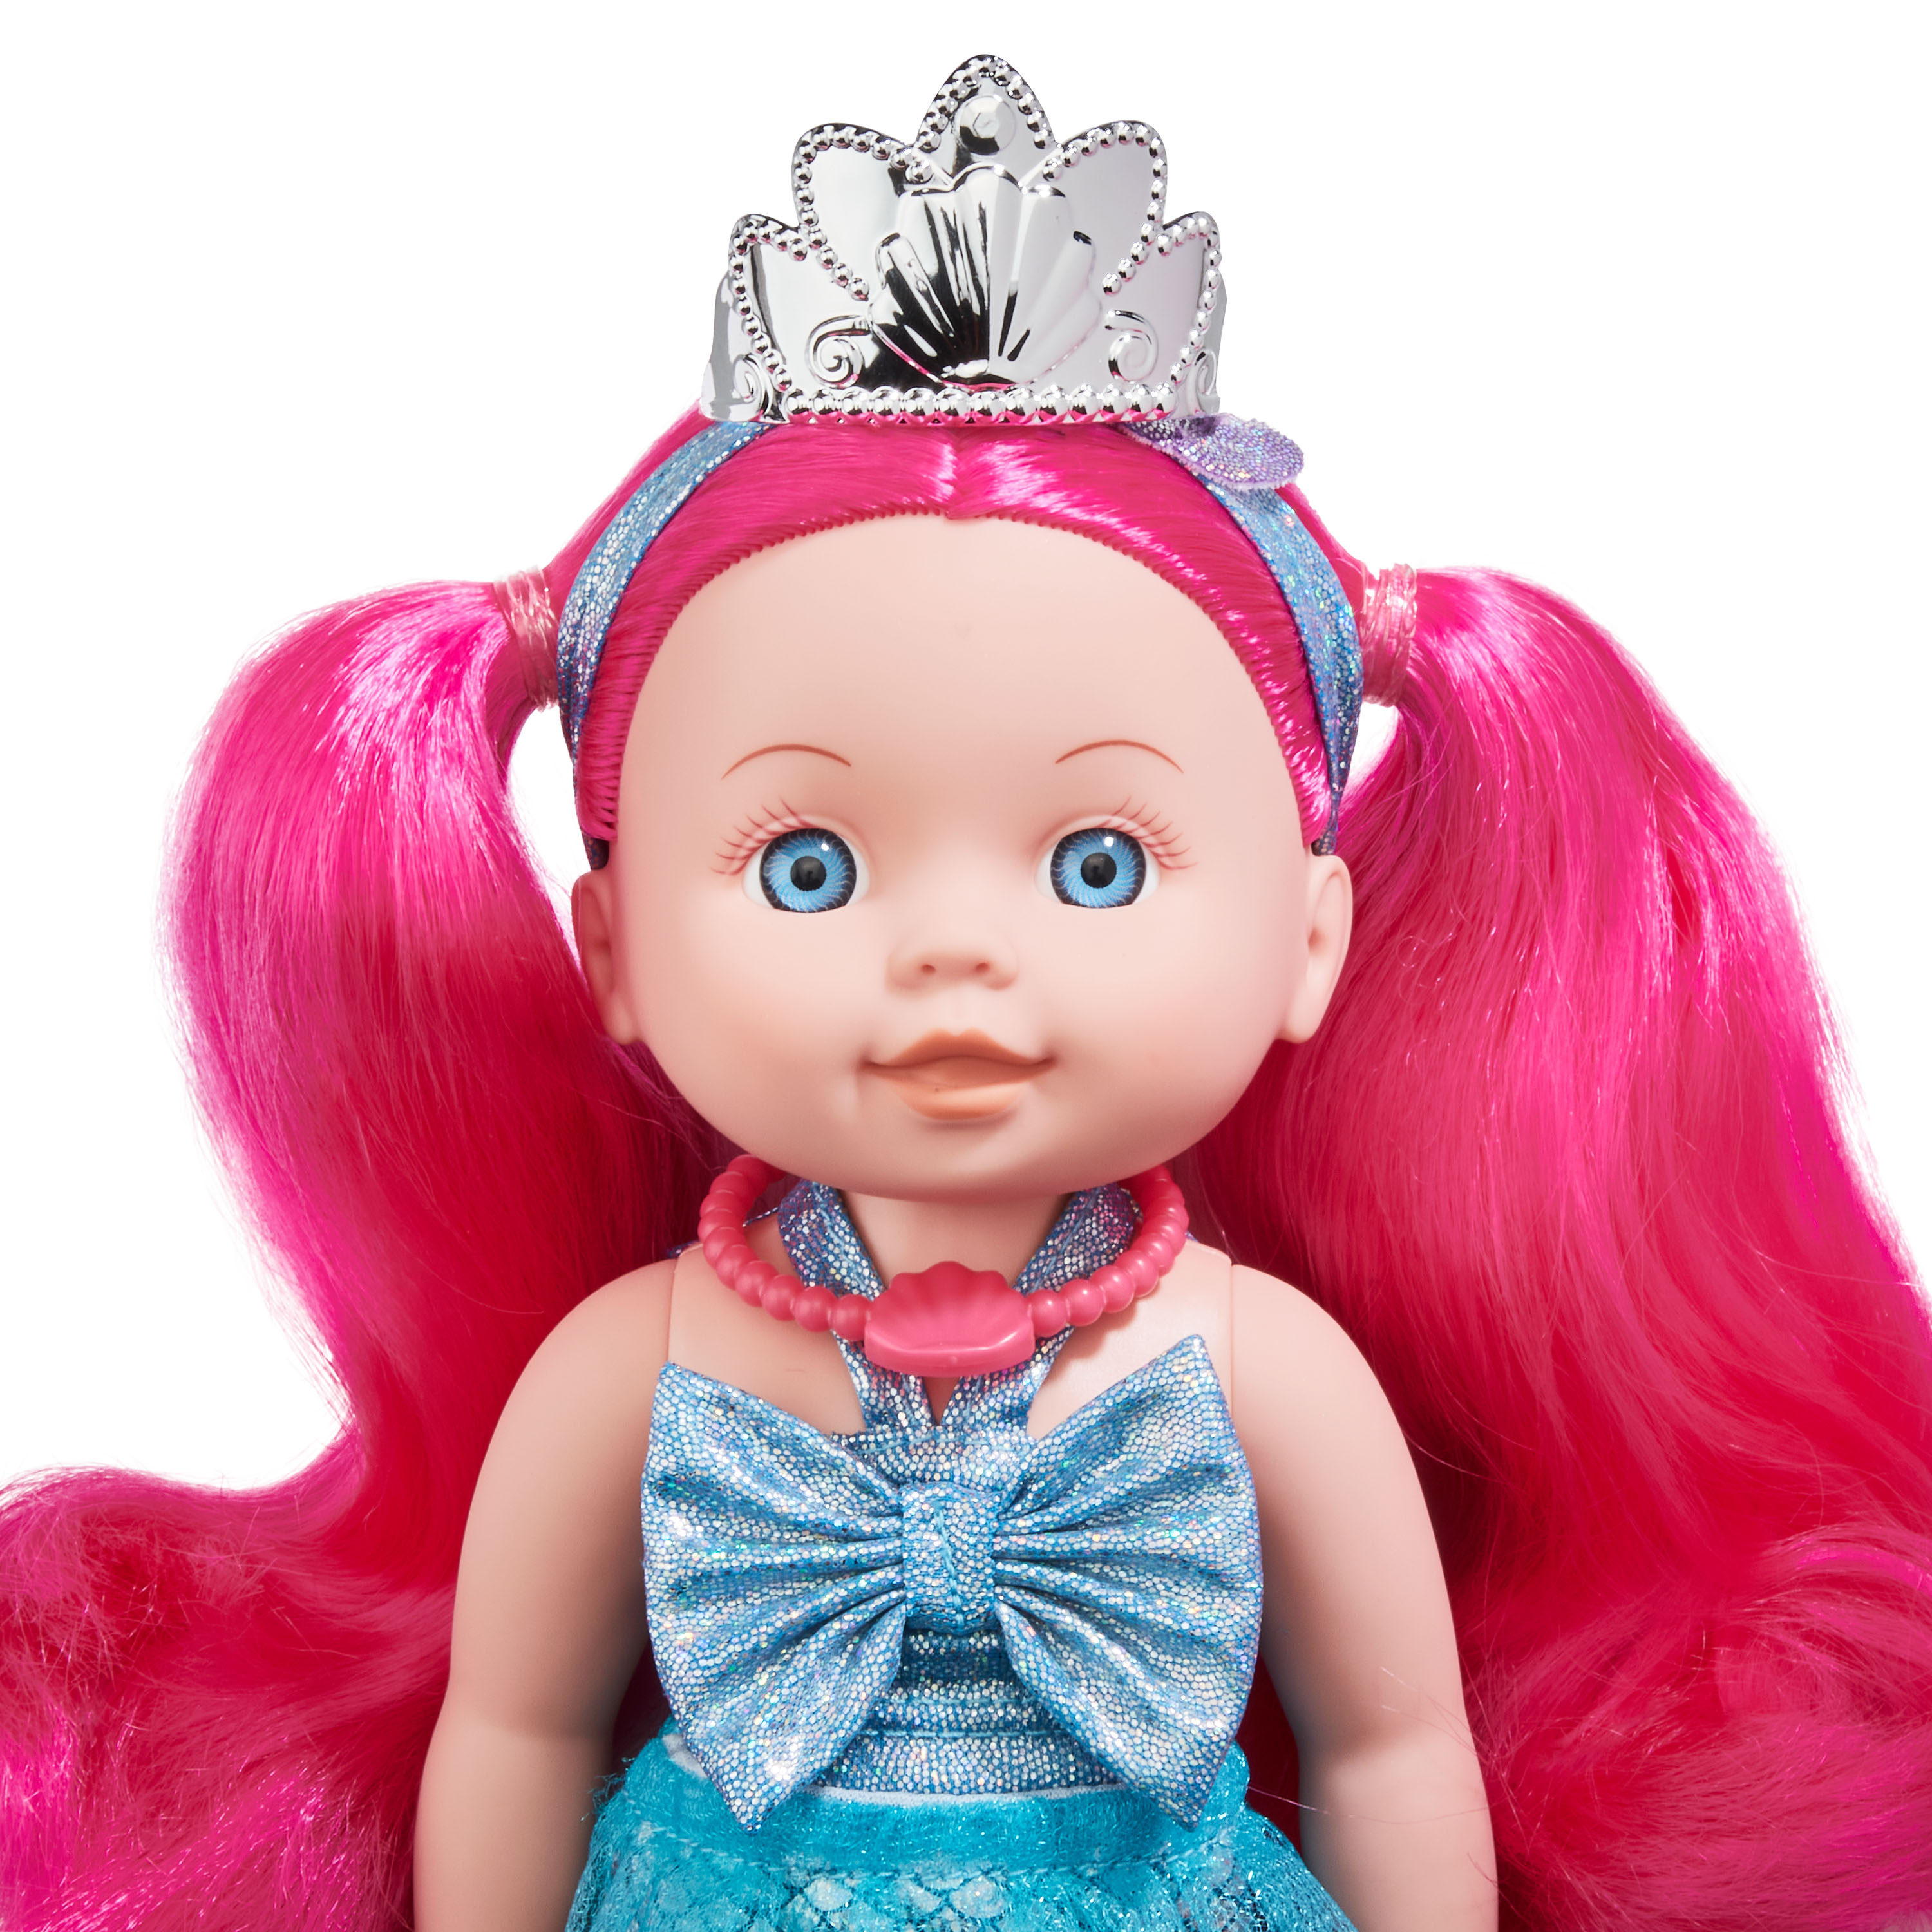 Kid Connection Mermaid Baby Doll Play Set, Blue Eyes, Pink Hair, Light Skin Tone - image 4 of 8